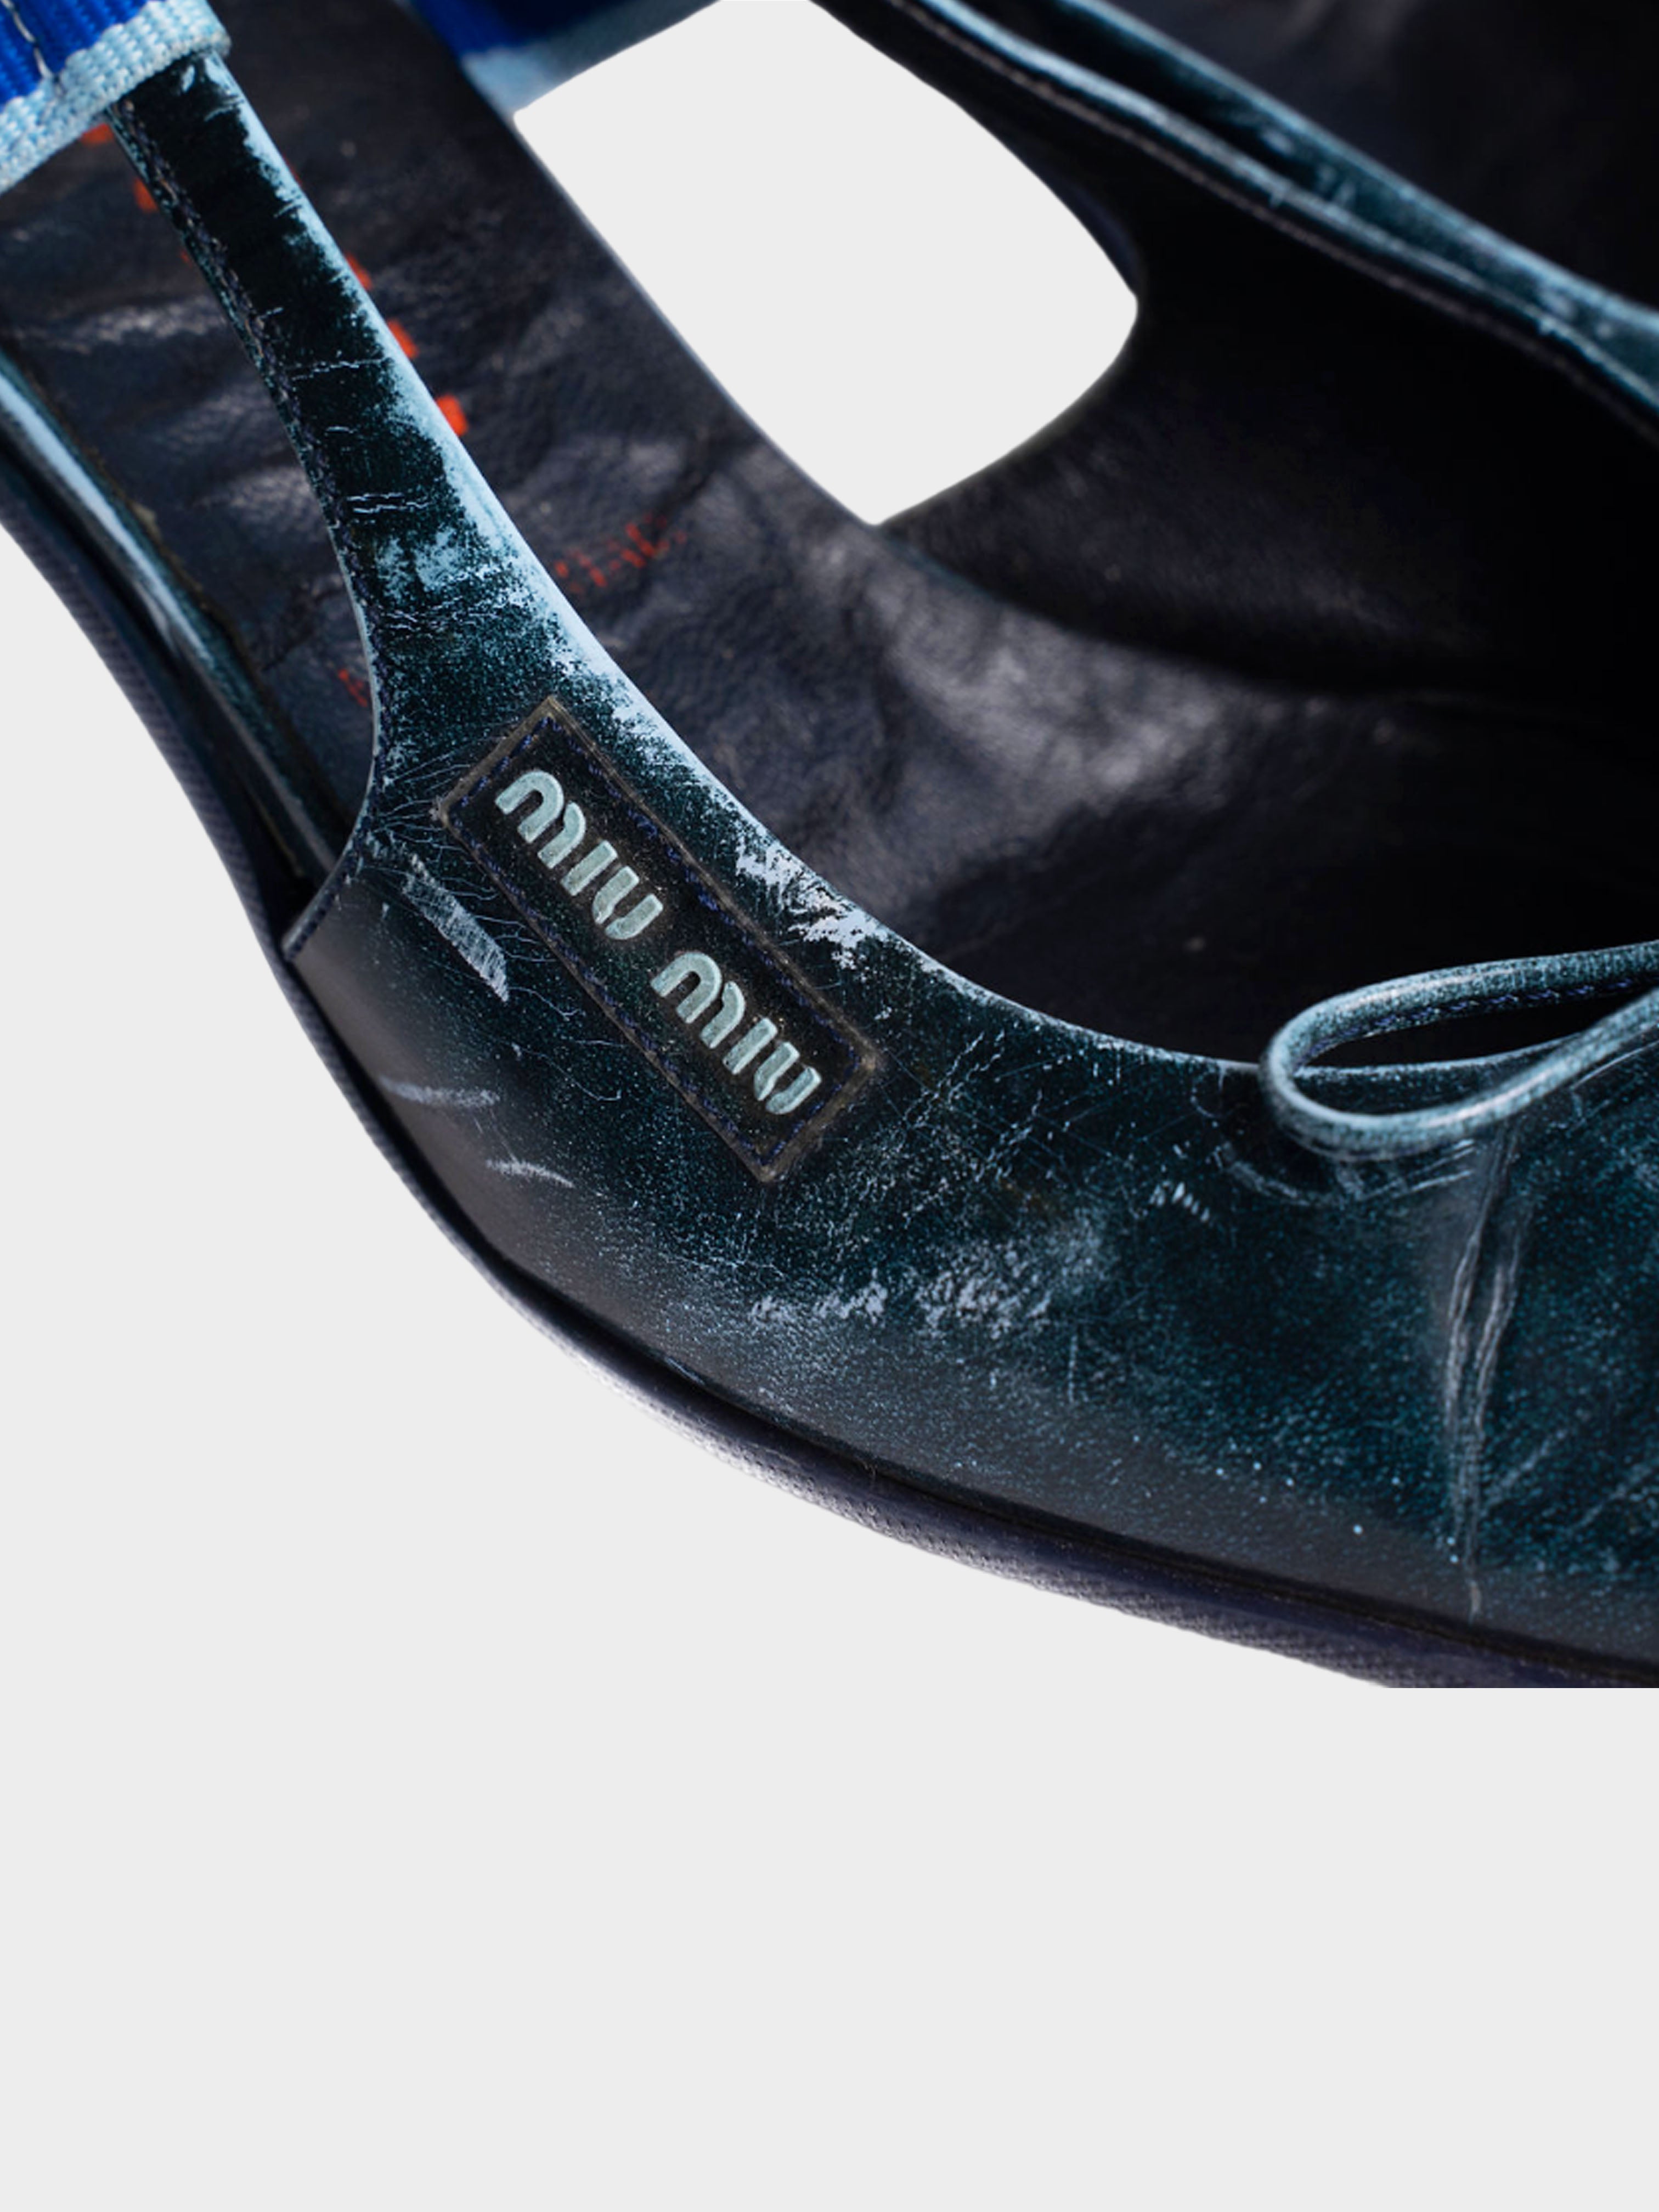 Miu Miu SS 2000 Rare Blue "Distressed Leather" Bow Heels